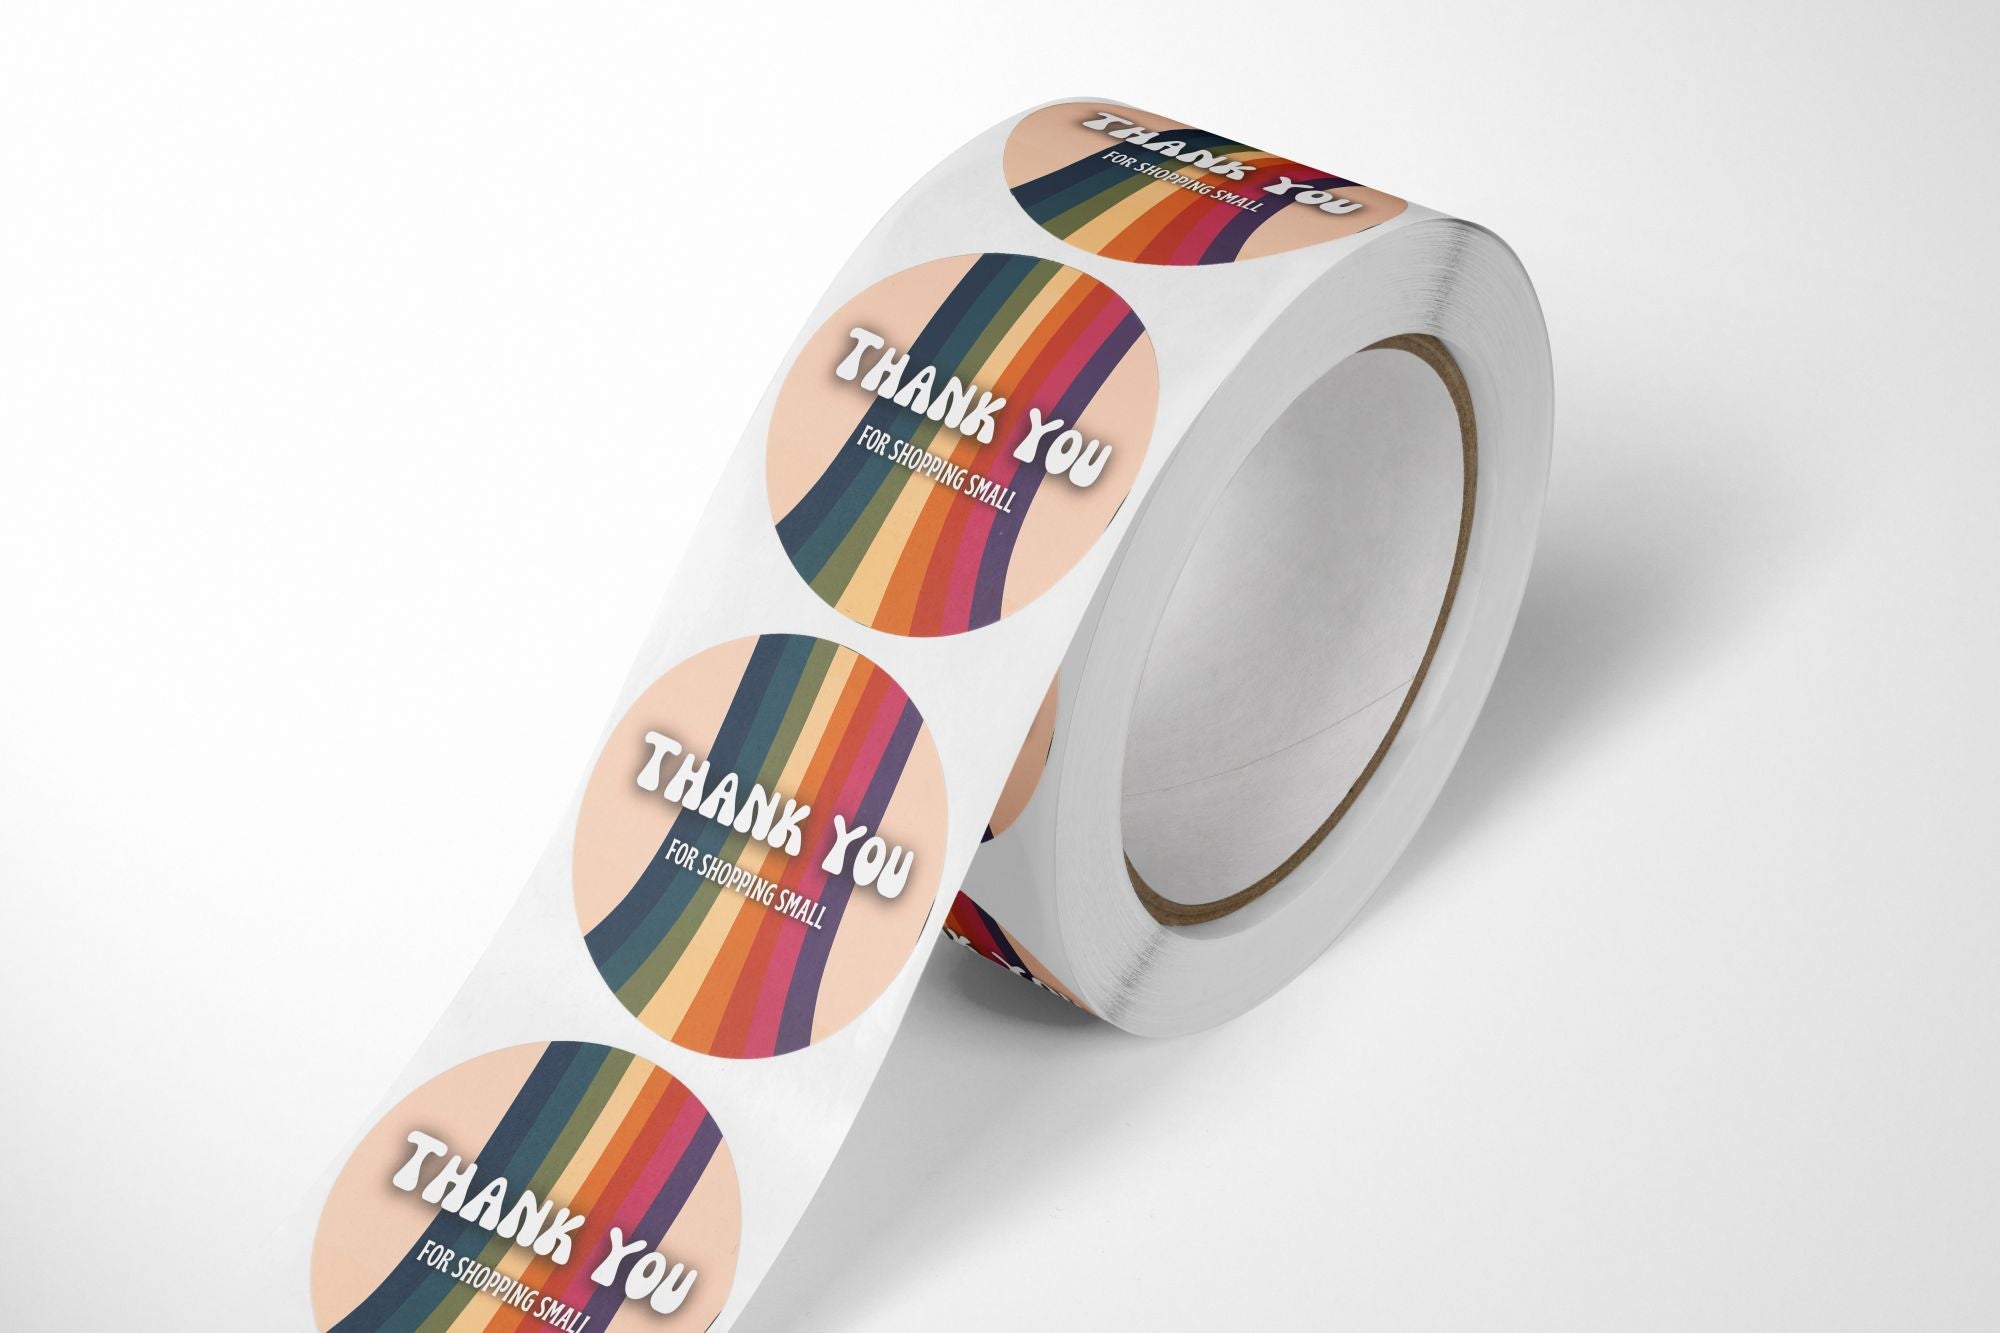 Small Rainbow Stickers